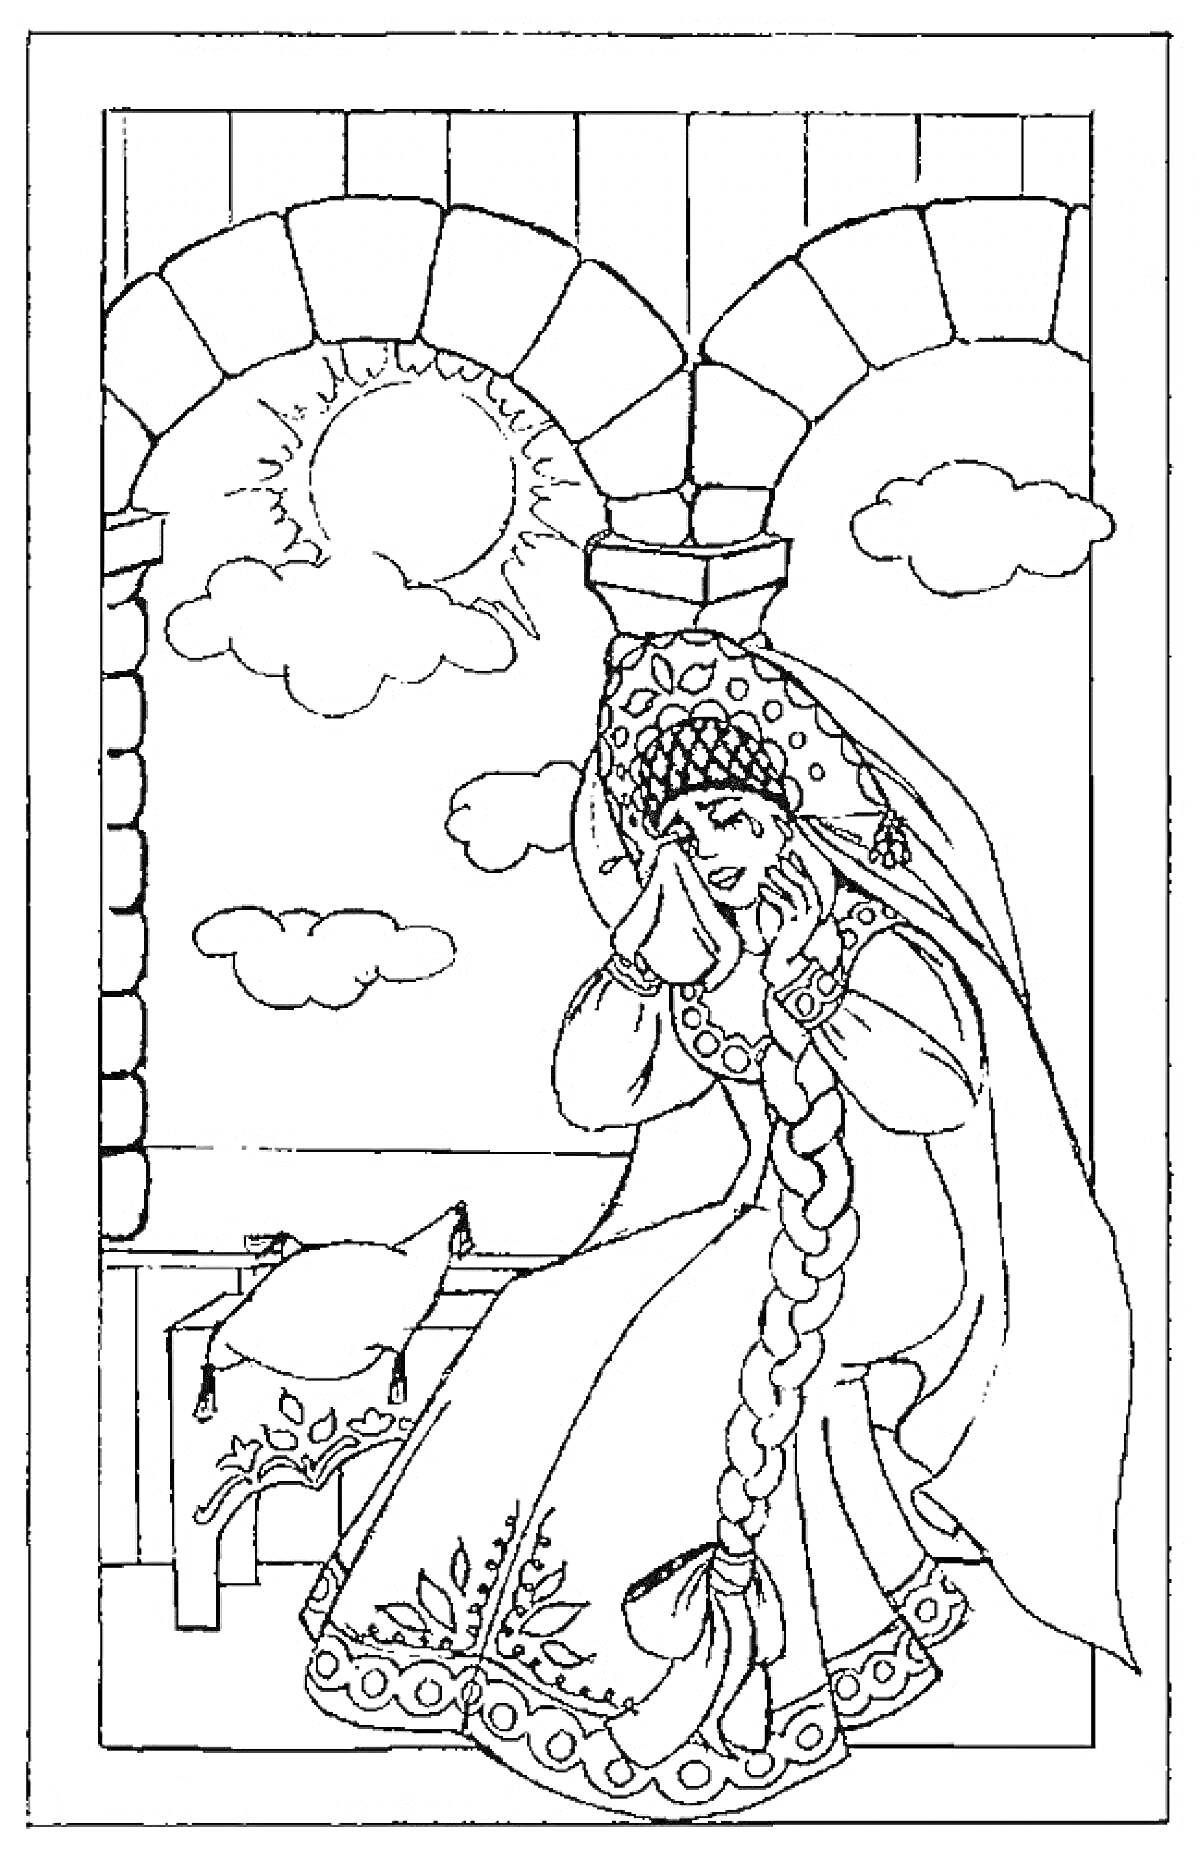 Принцесса с длинной косой, сидящая у окна с арками, на заднем плане солнце и облака.